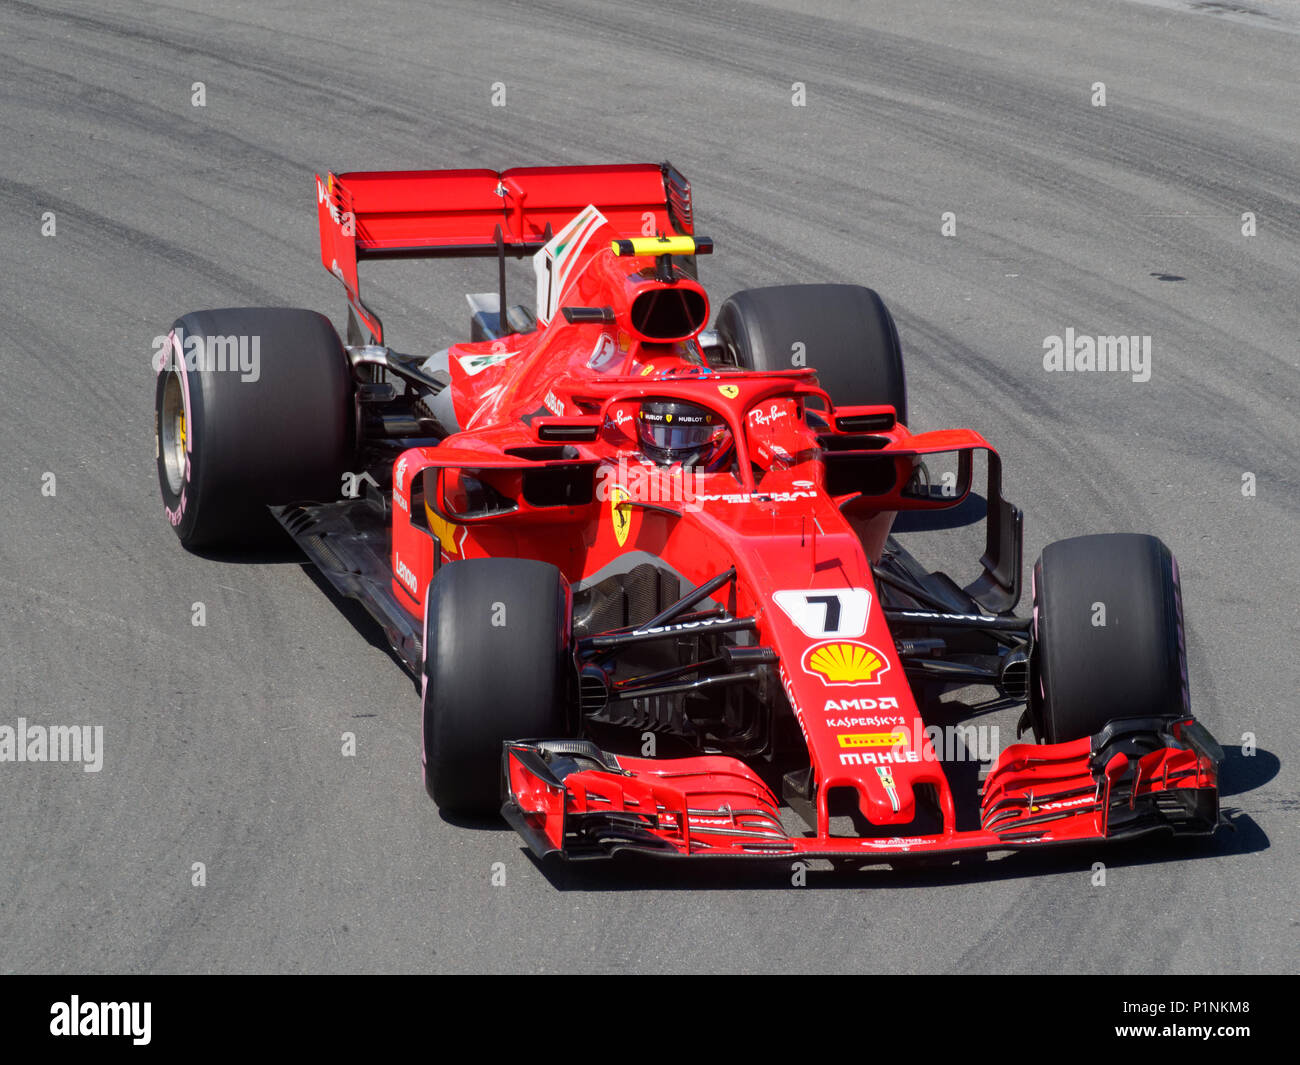 Ferrari f1 car hi-res stock photography and images - Alamy